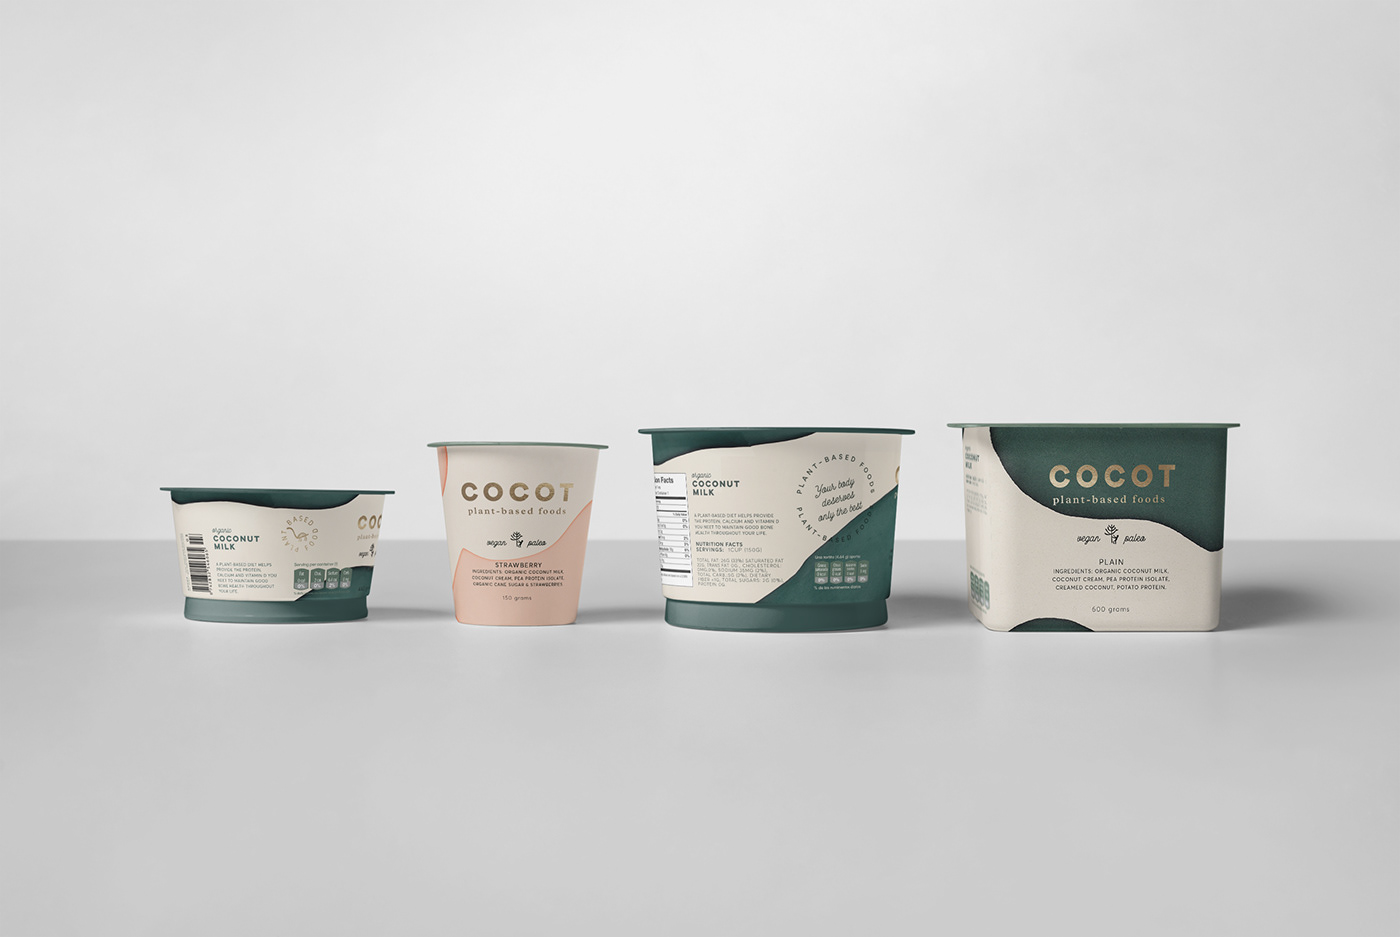 cocot yougurt Packaging mexico Dairy gourmet vegan organic Plant Based